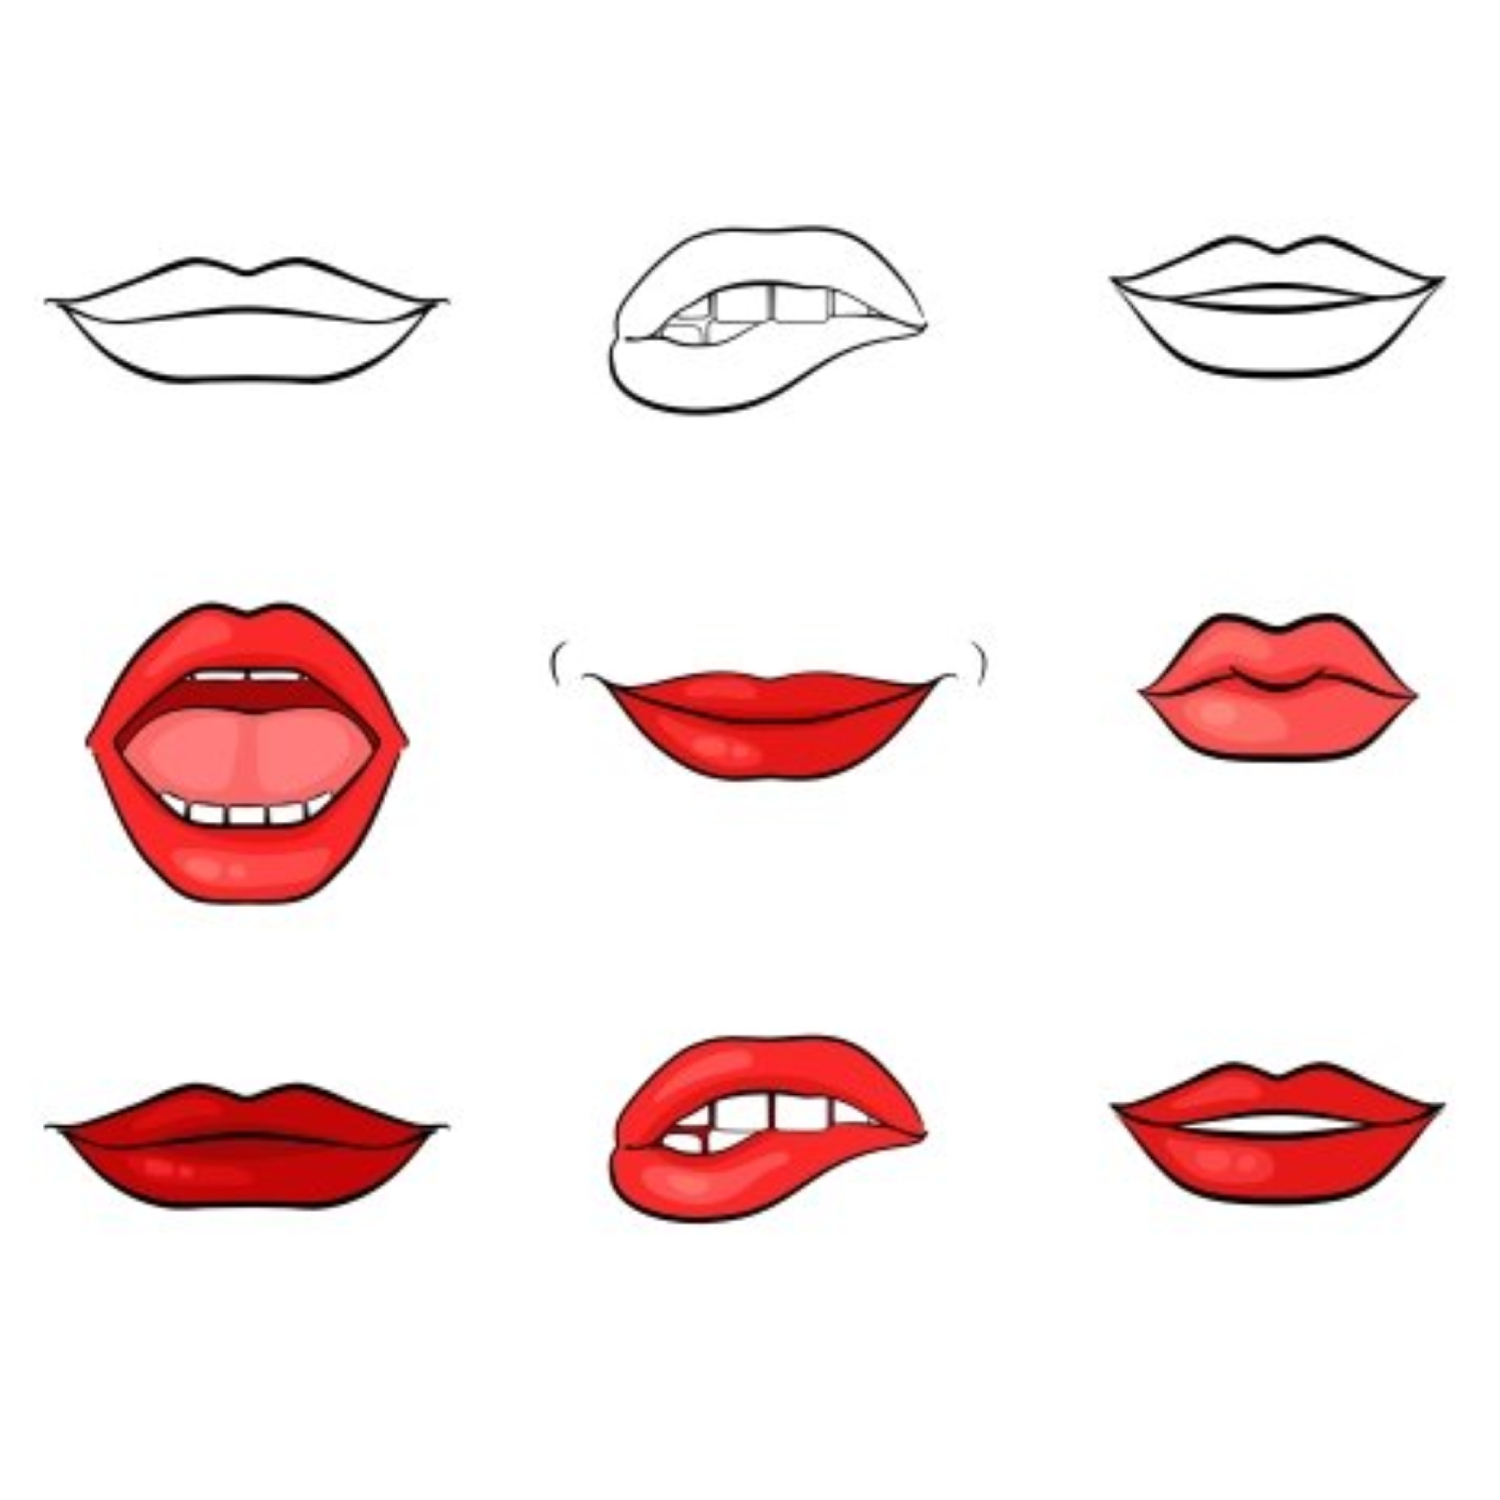 100 Thickened Lips Illustrations RoyaltyFree Vector Graphics  Clip Art   iStock